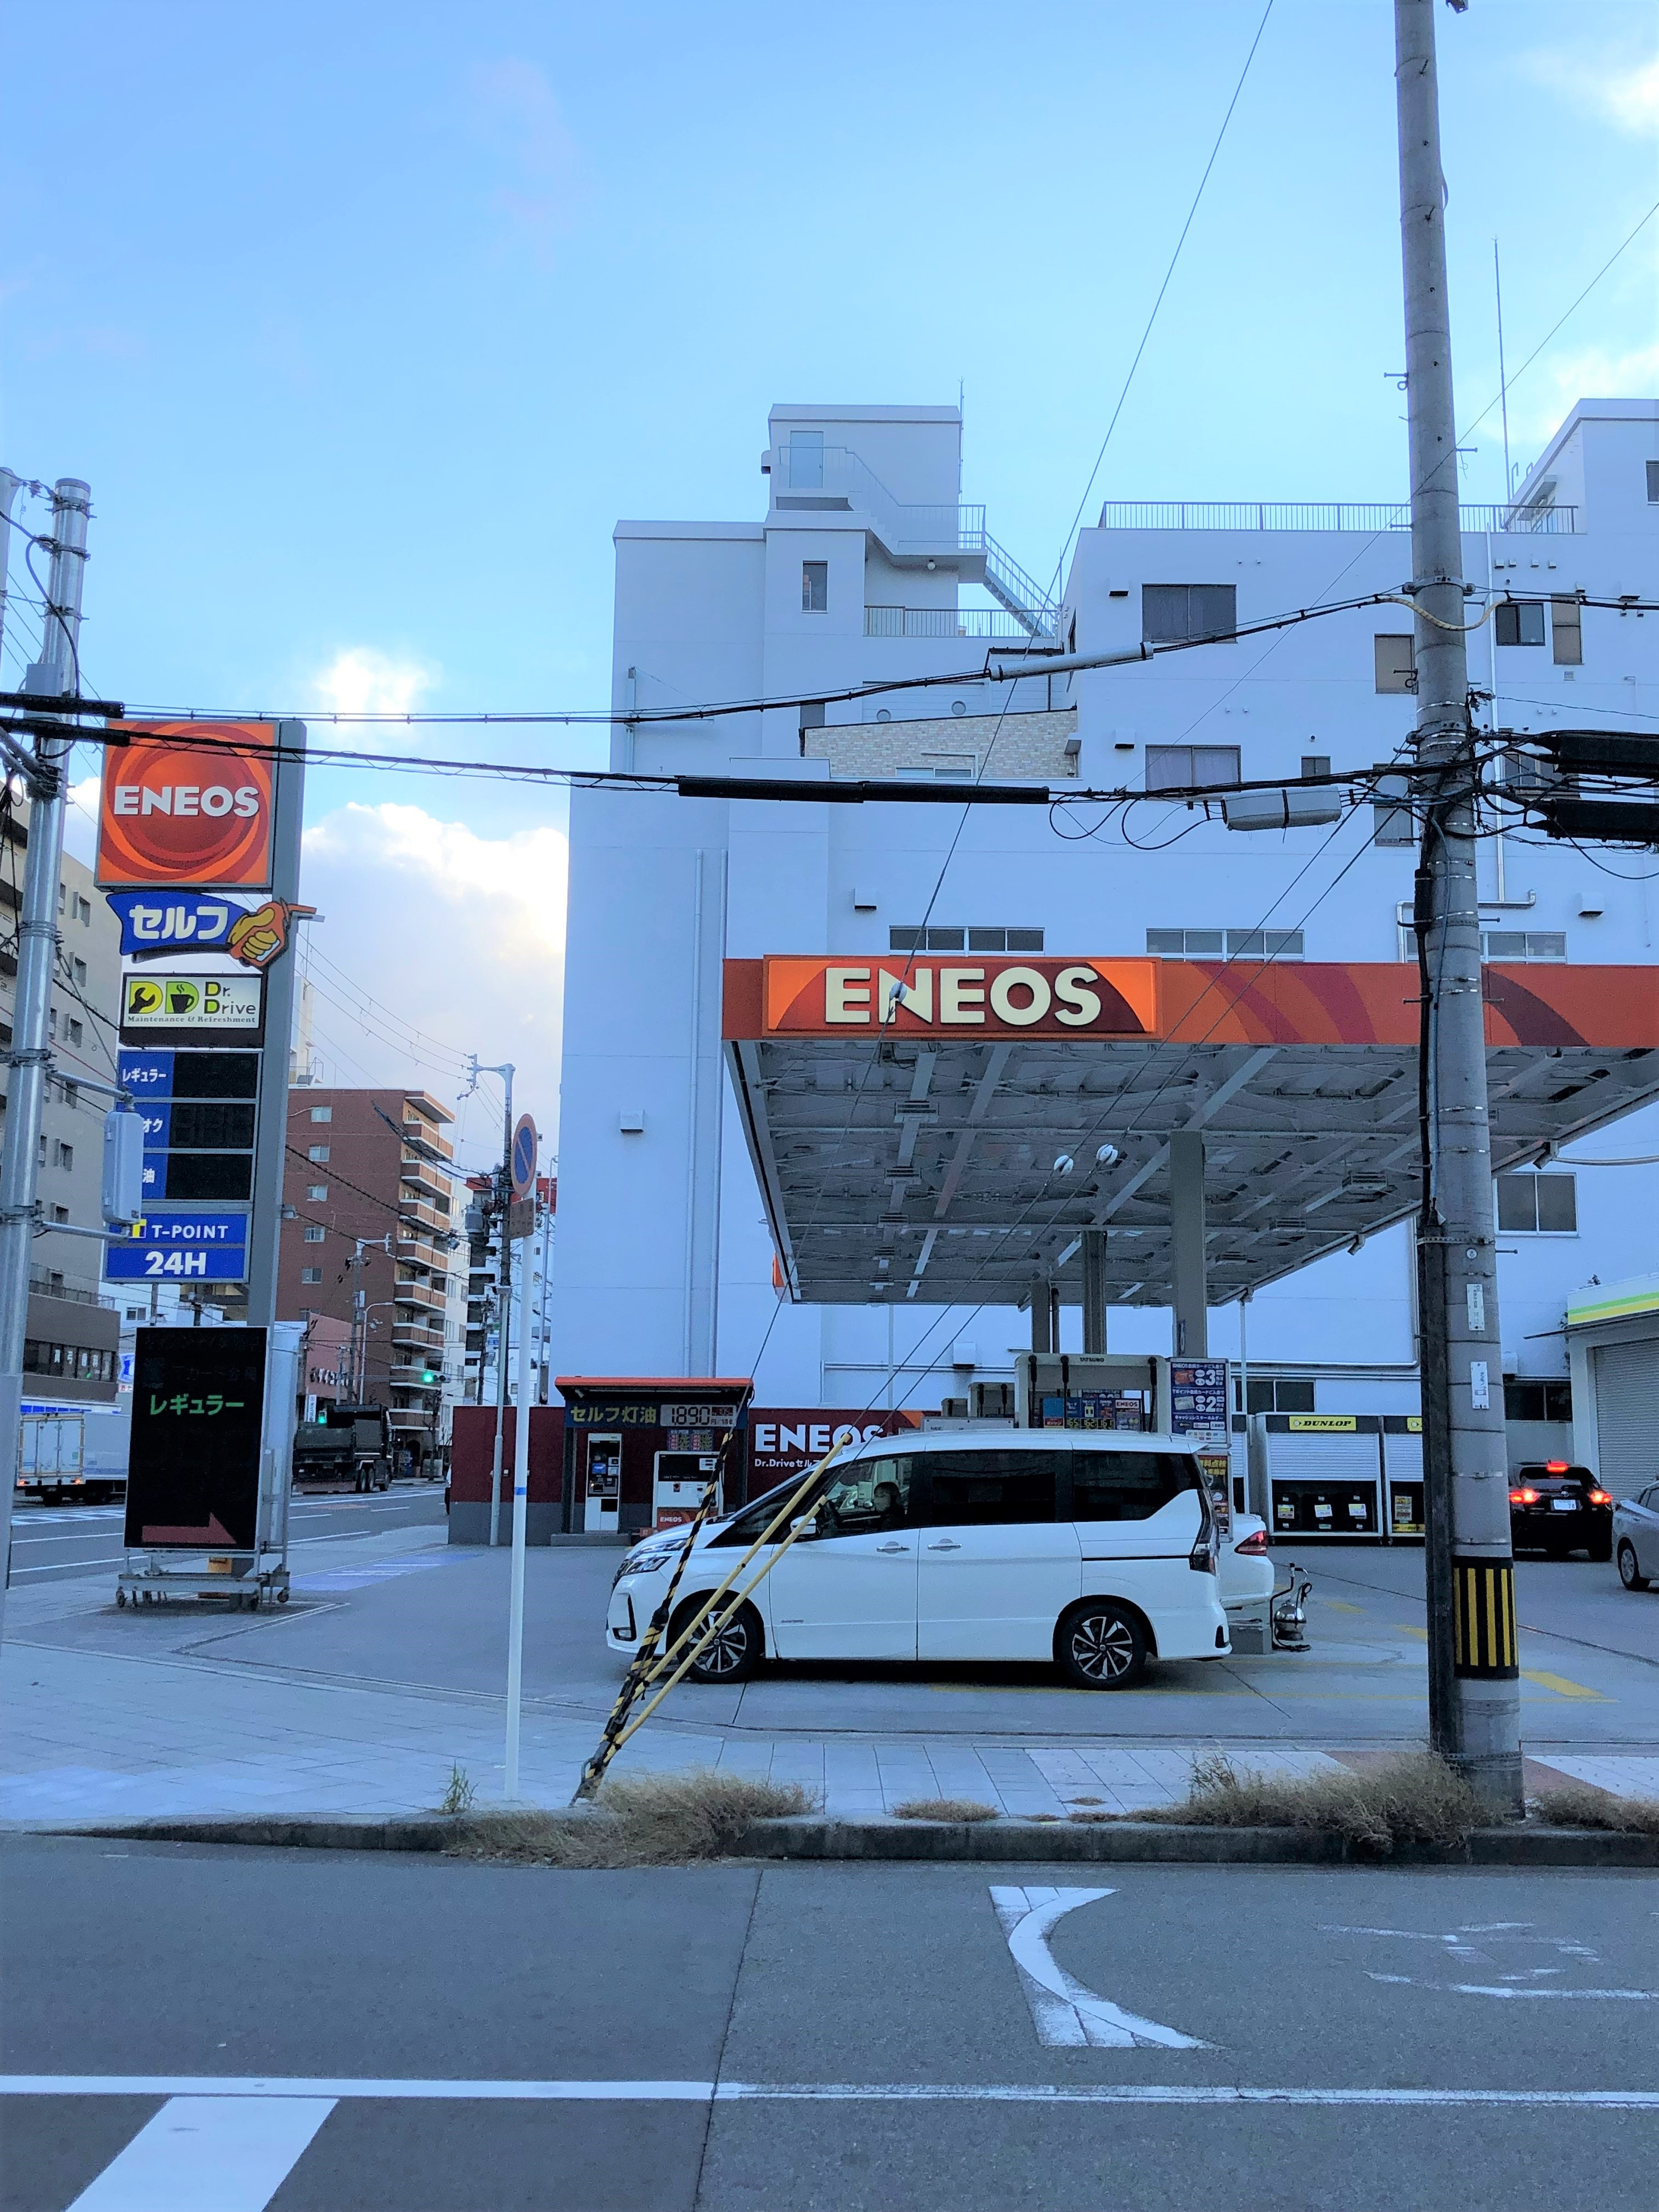 ENEOS Dr.Driveセルフ桜川店(ENEOSフロンティア) 大阪市 06-6562-5445